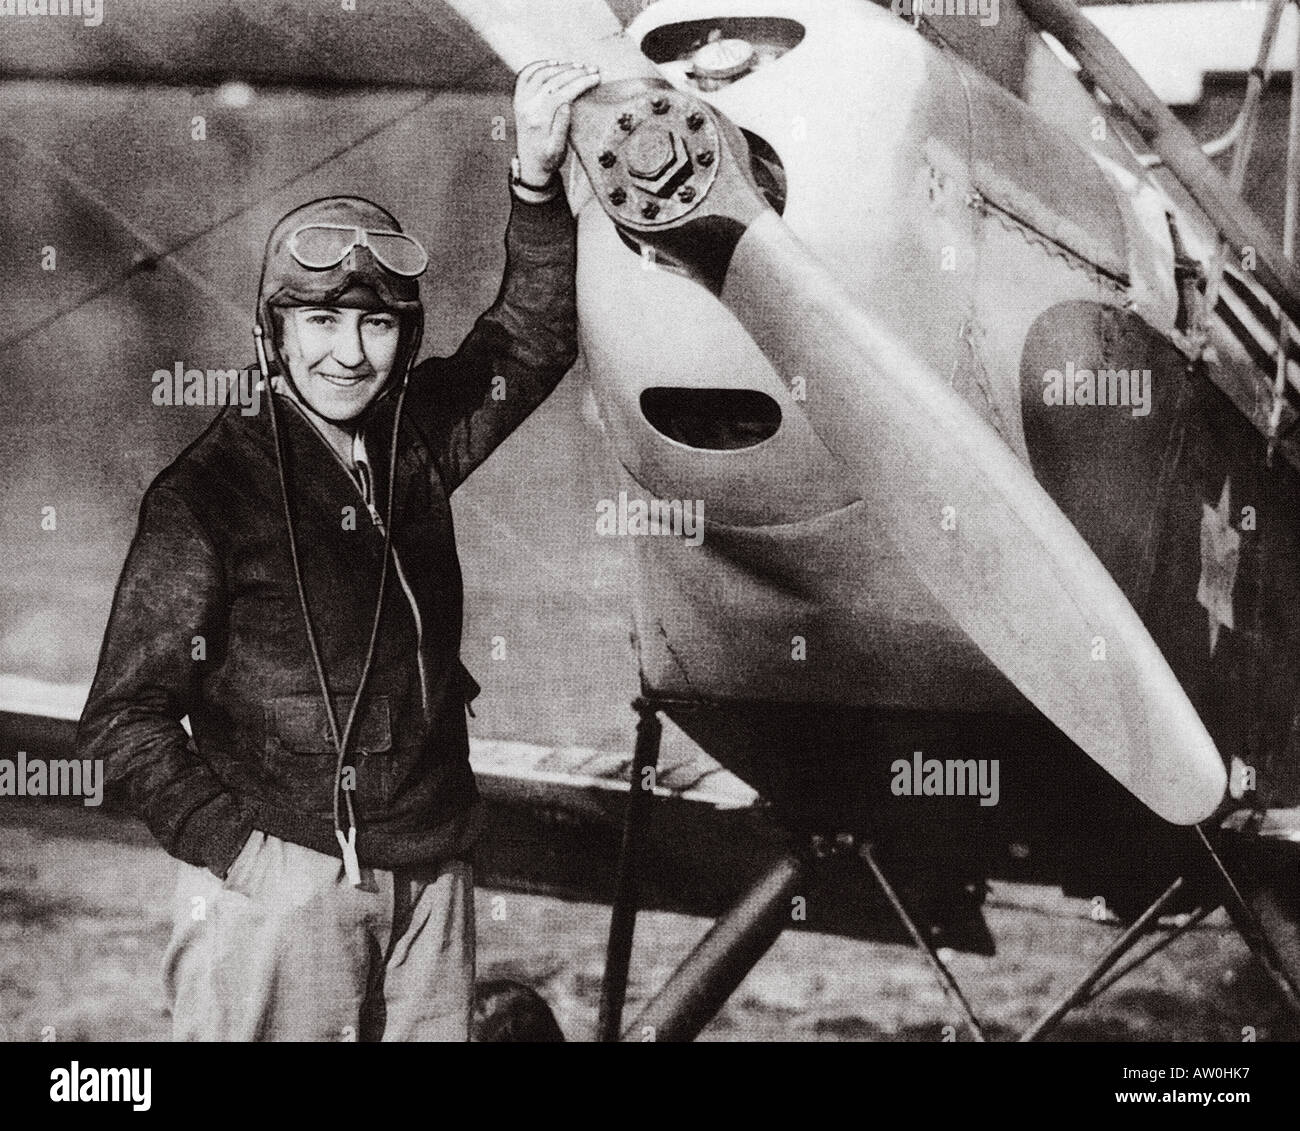 AMY JOHNSON pionero aviador inglés de 1903 a 1941, que voló solo desde Inglaterra a Australia en 1930 Foto de stock